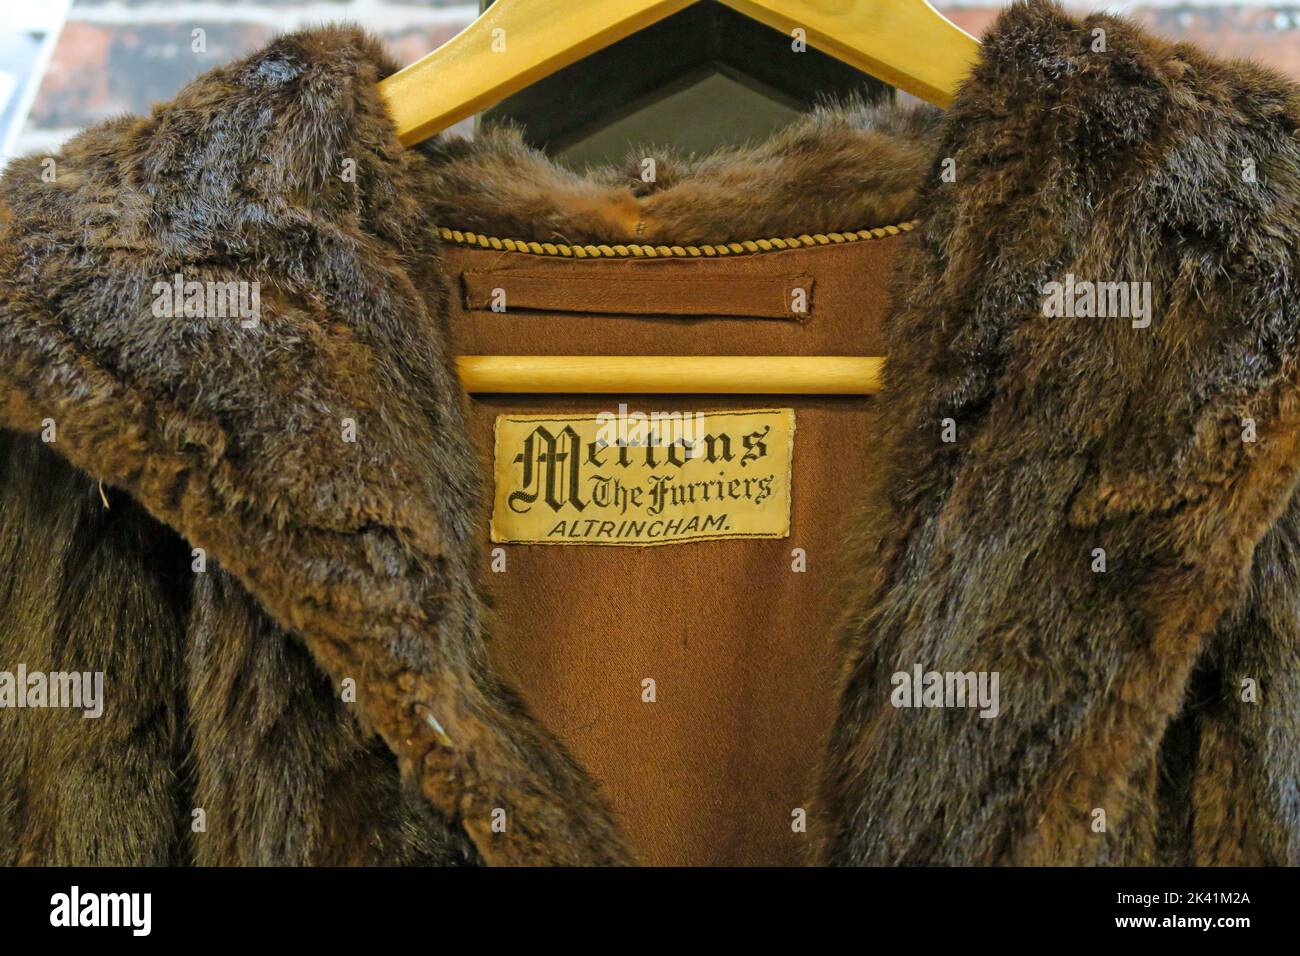 Mertons los furriers, abrigo de piel, de Altrincham, Trafford, Greater Manchester, Inglaterra, Reino Unido, Foto de stock